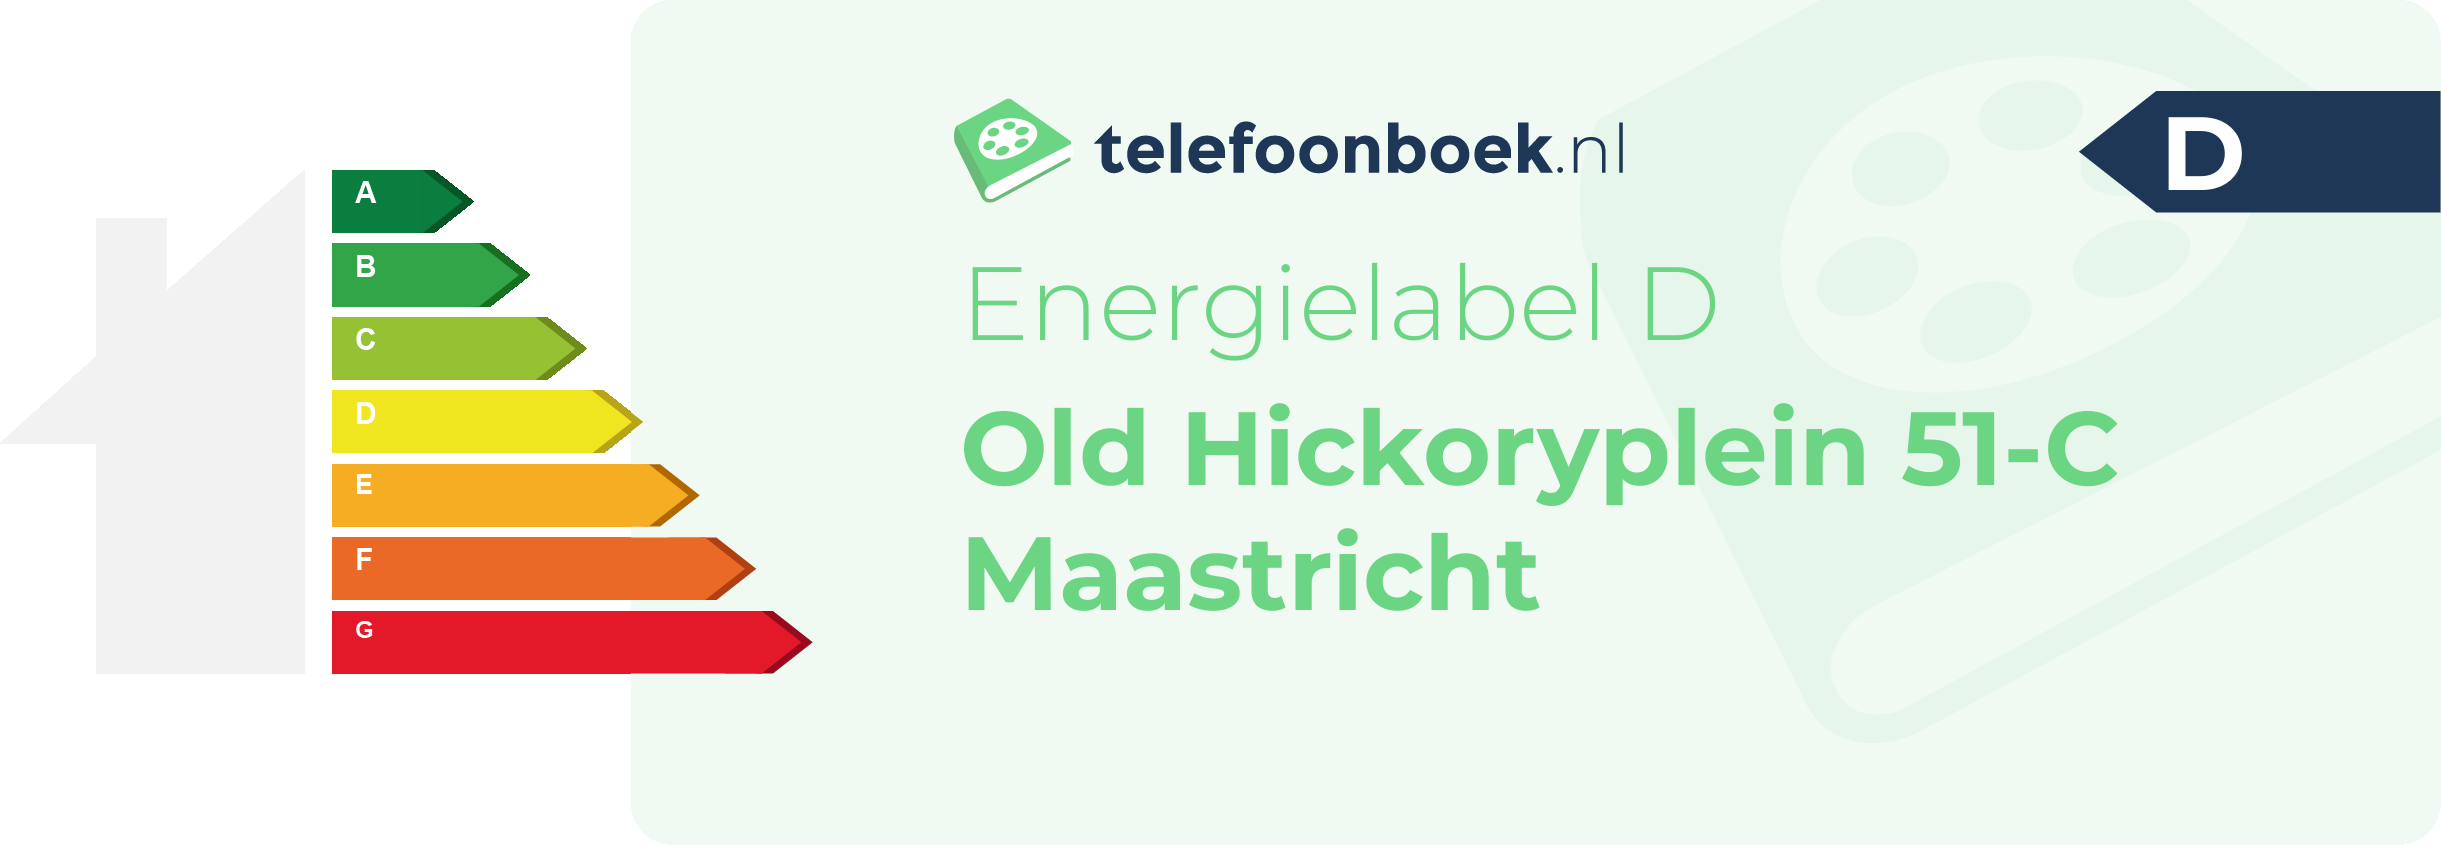 Energielabel Old Hickoryplein 51-C Maastricht